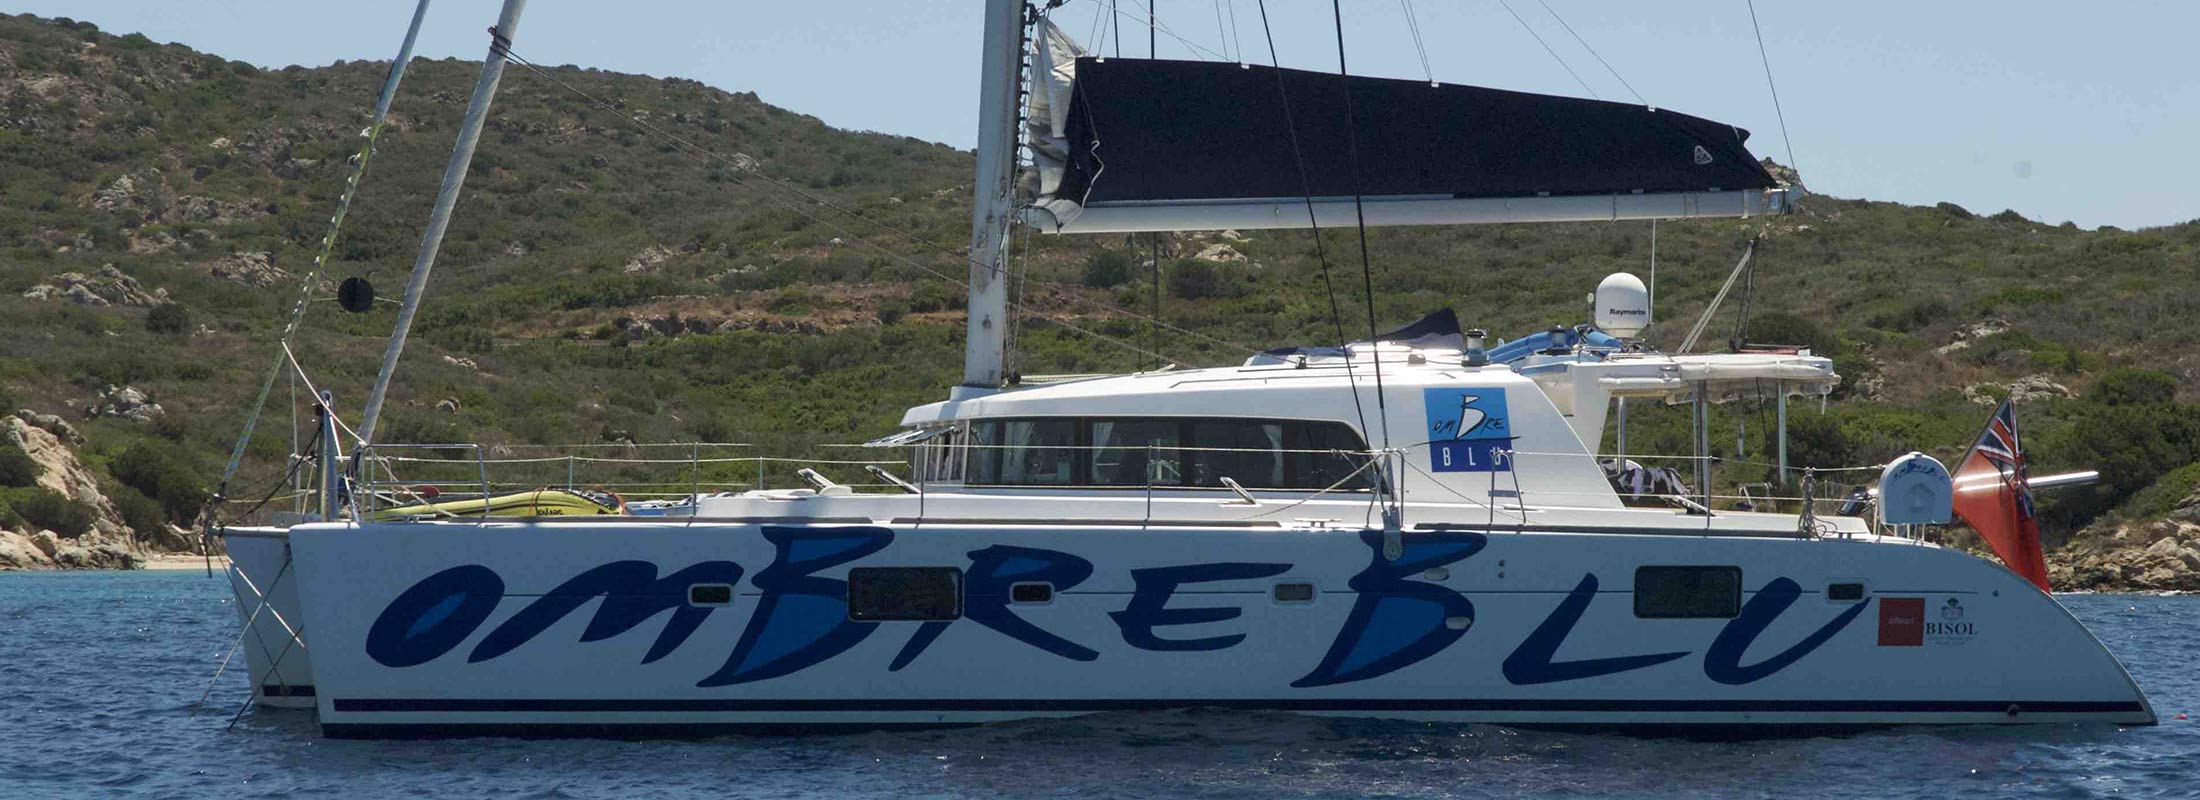 Ombre Blu Sailing Yacht for Charter Mediterranean slider 2